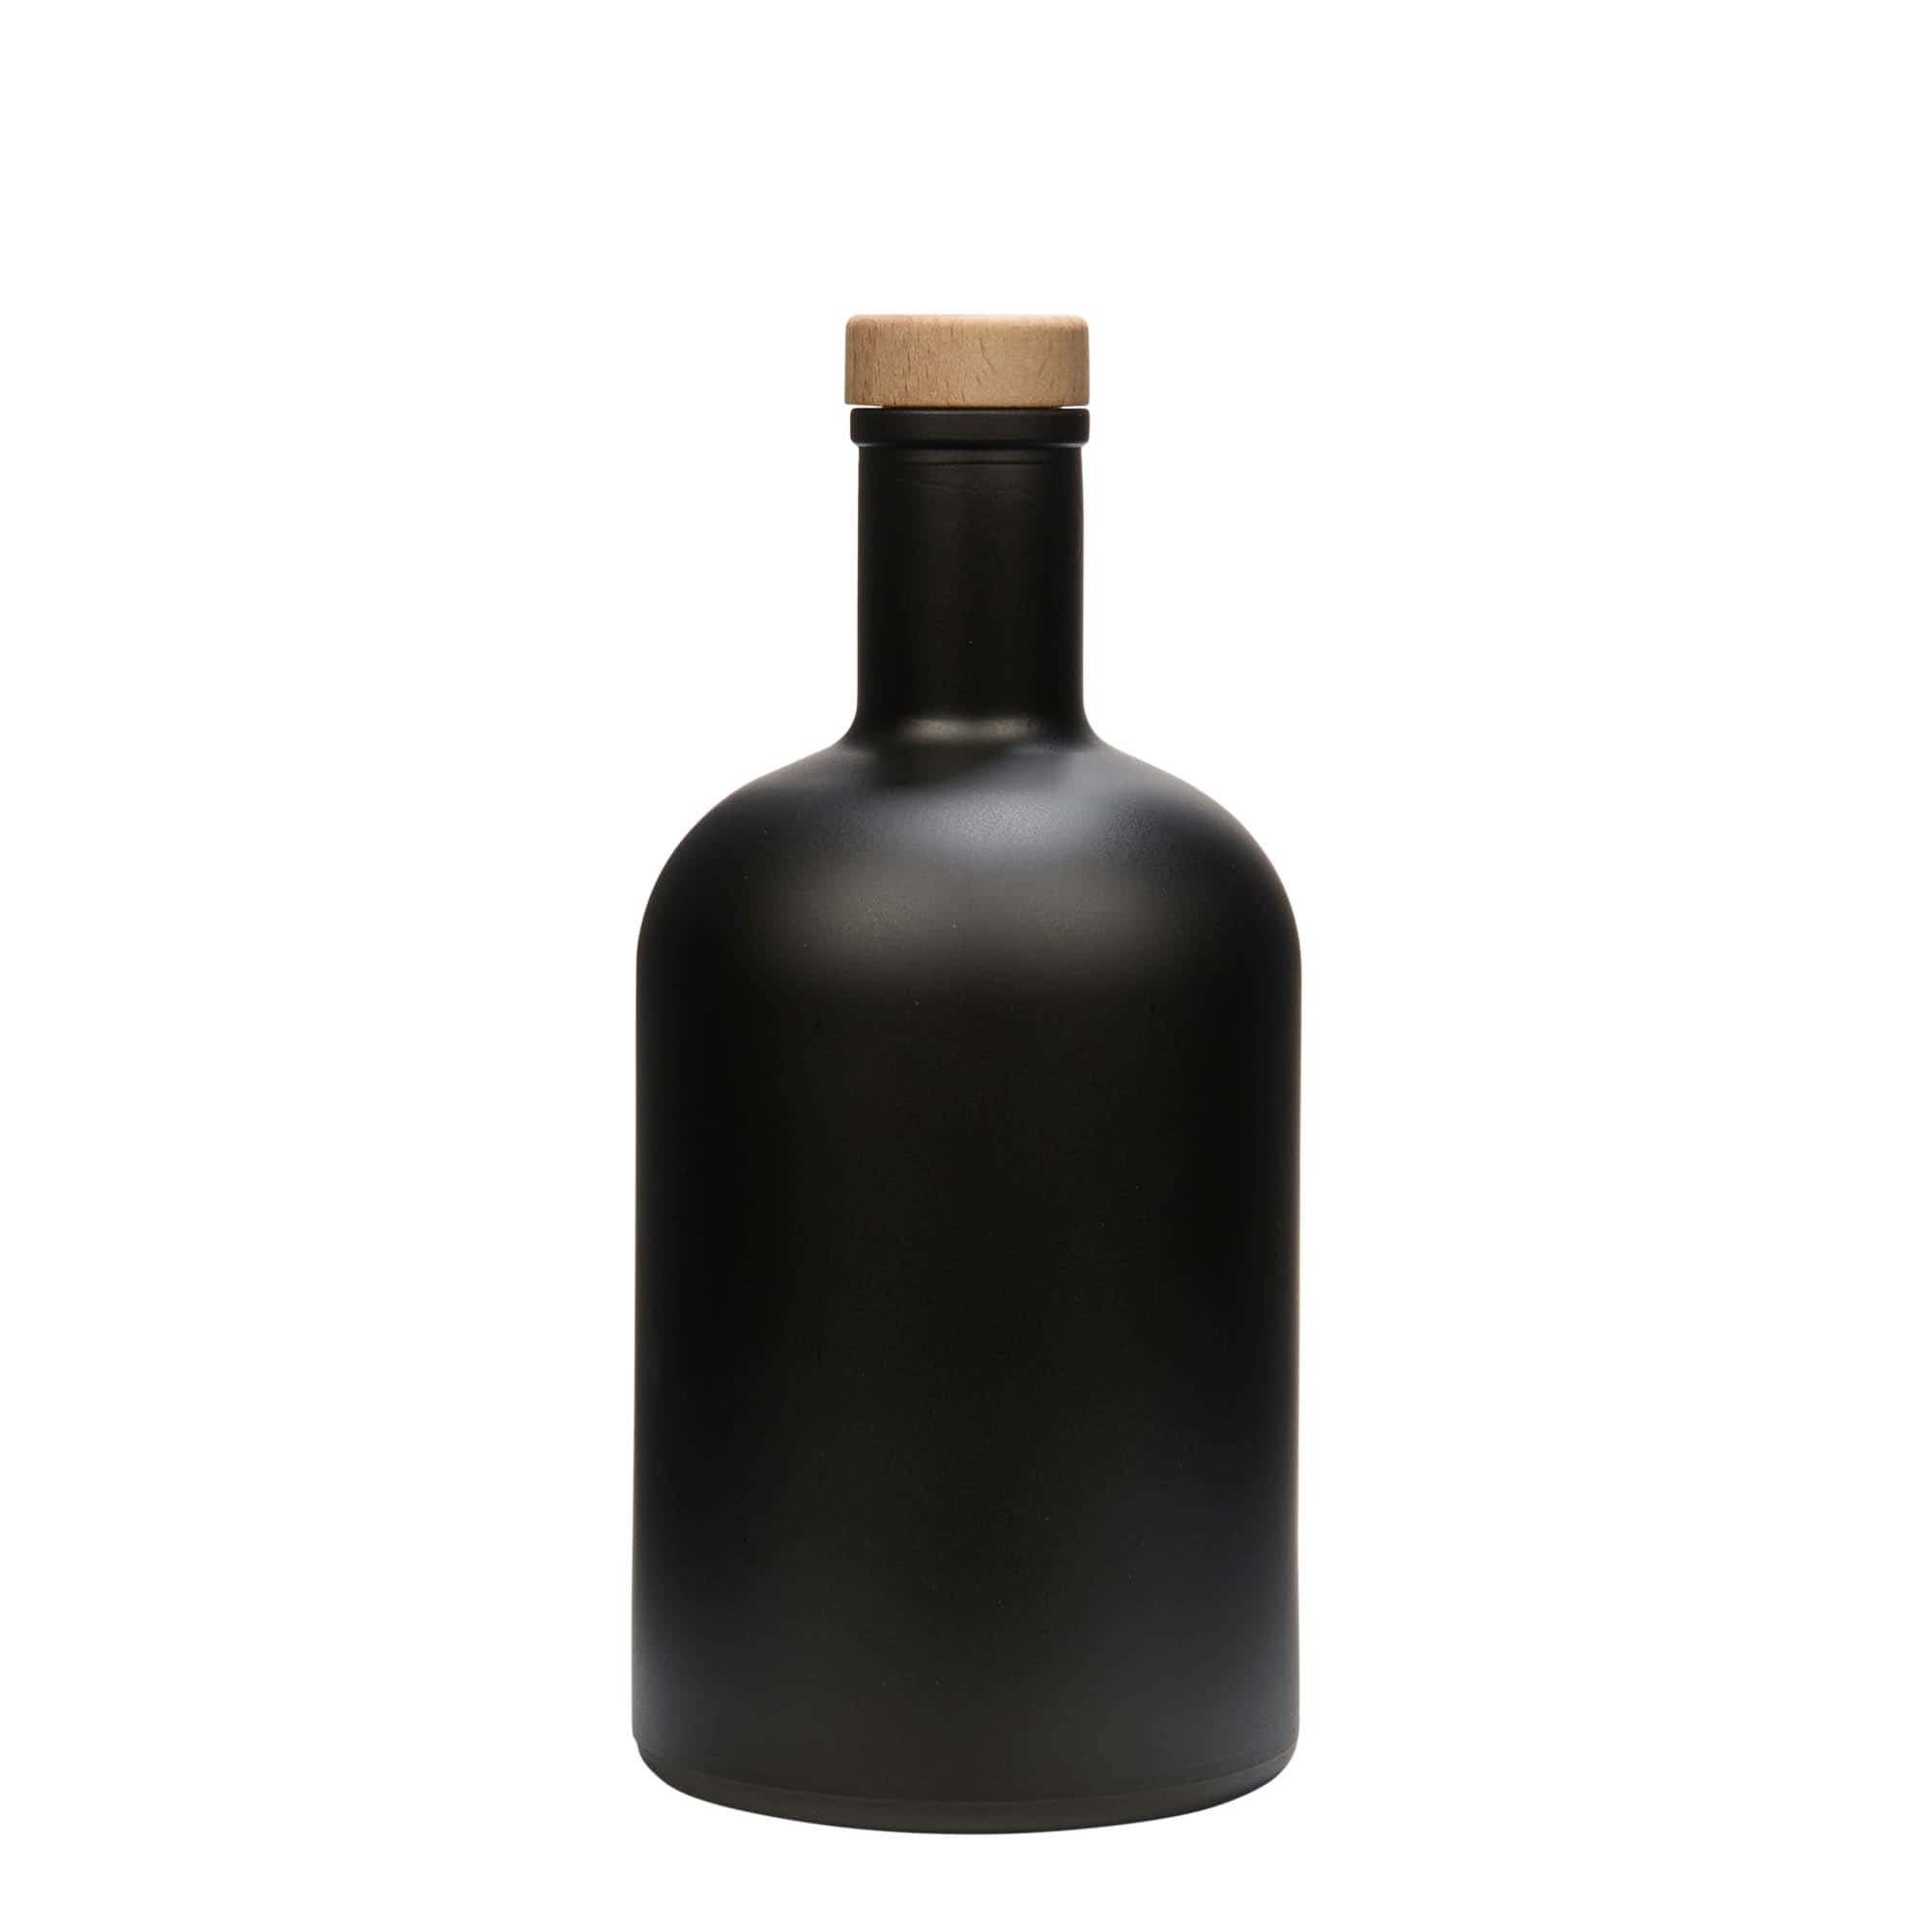 700 ml glass bottle 'Gerardino', black, closure: cork